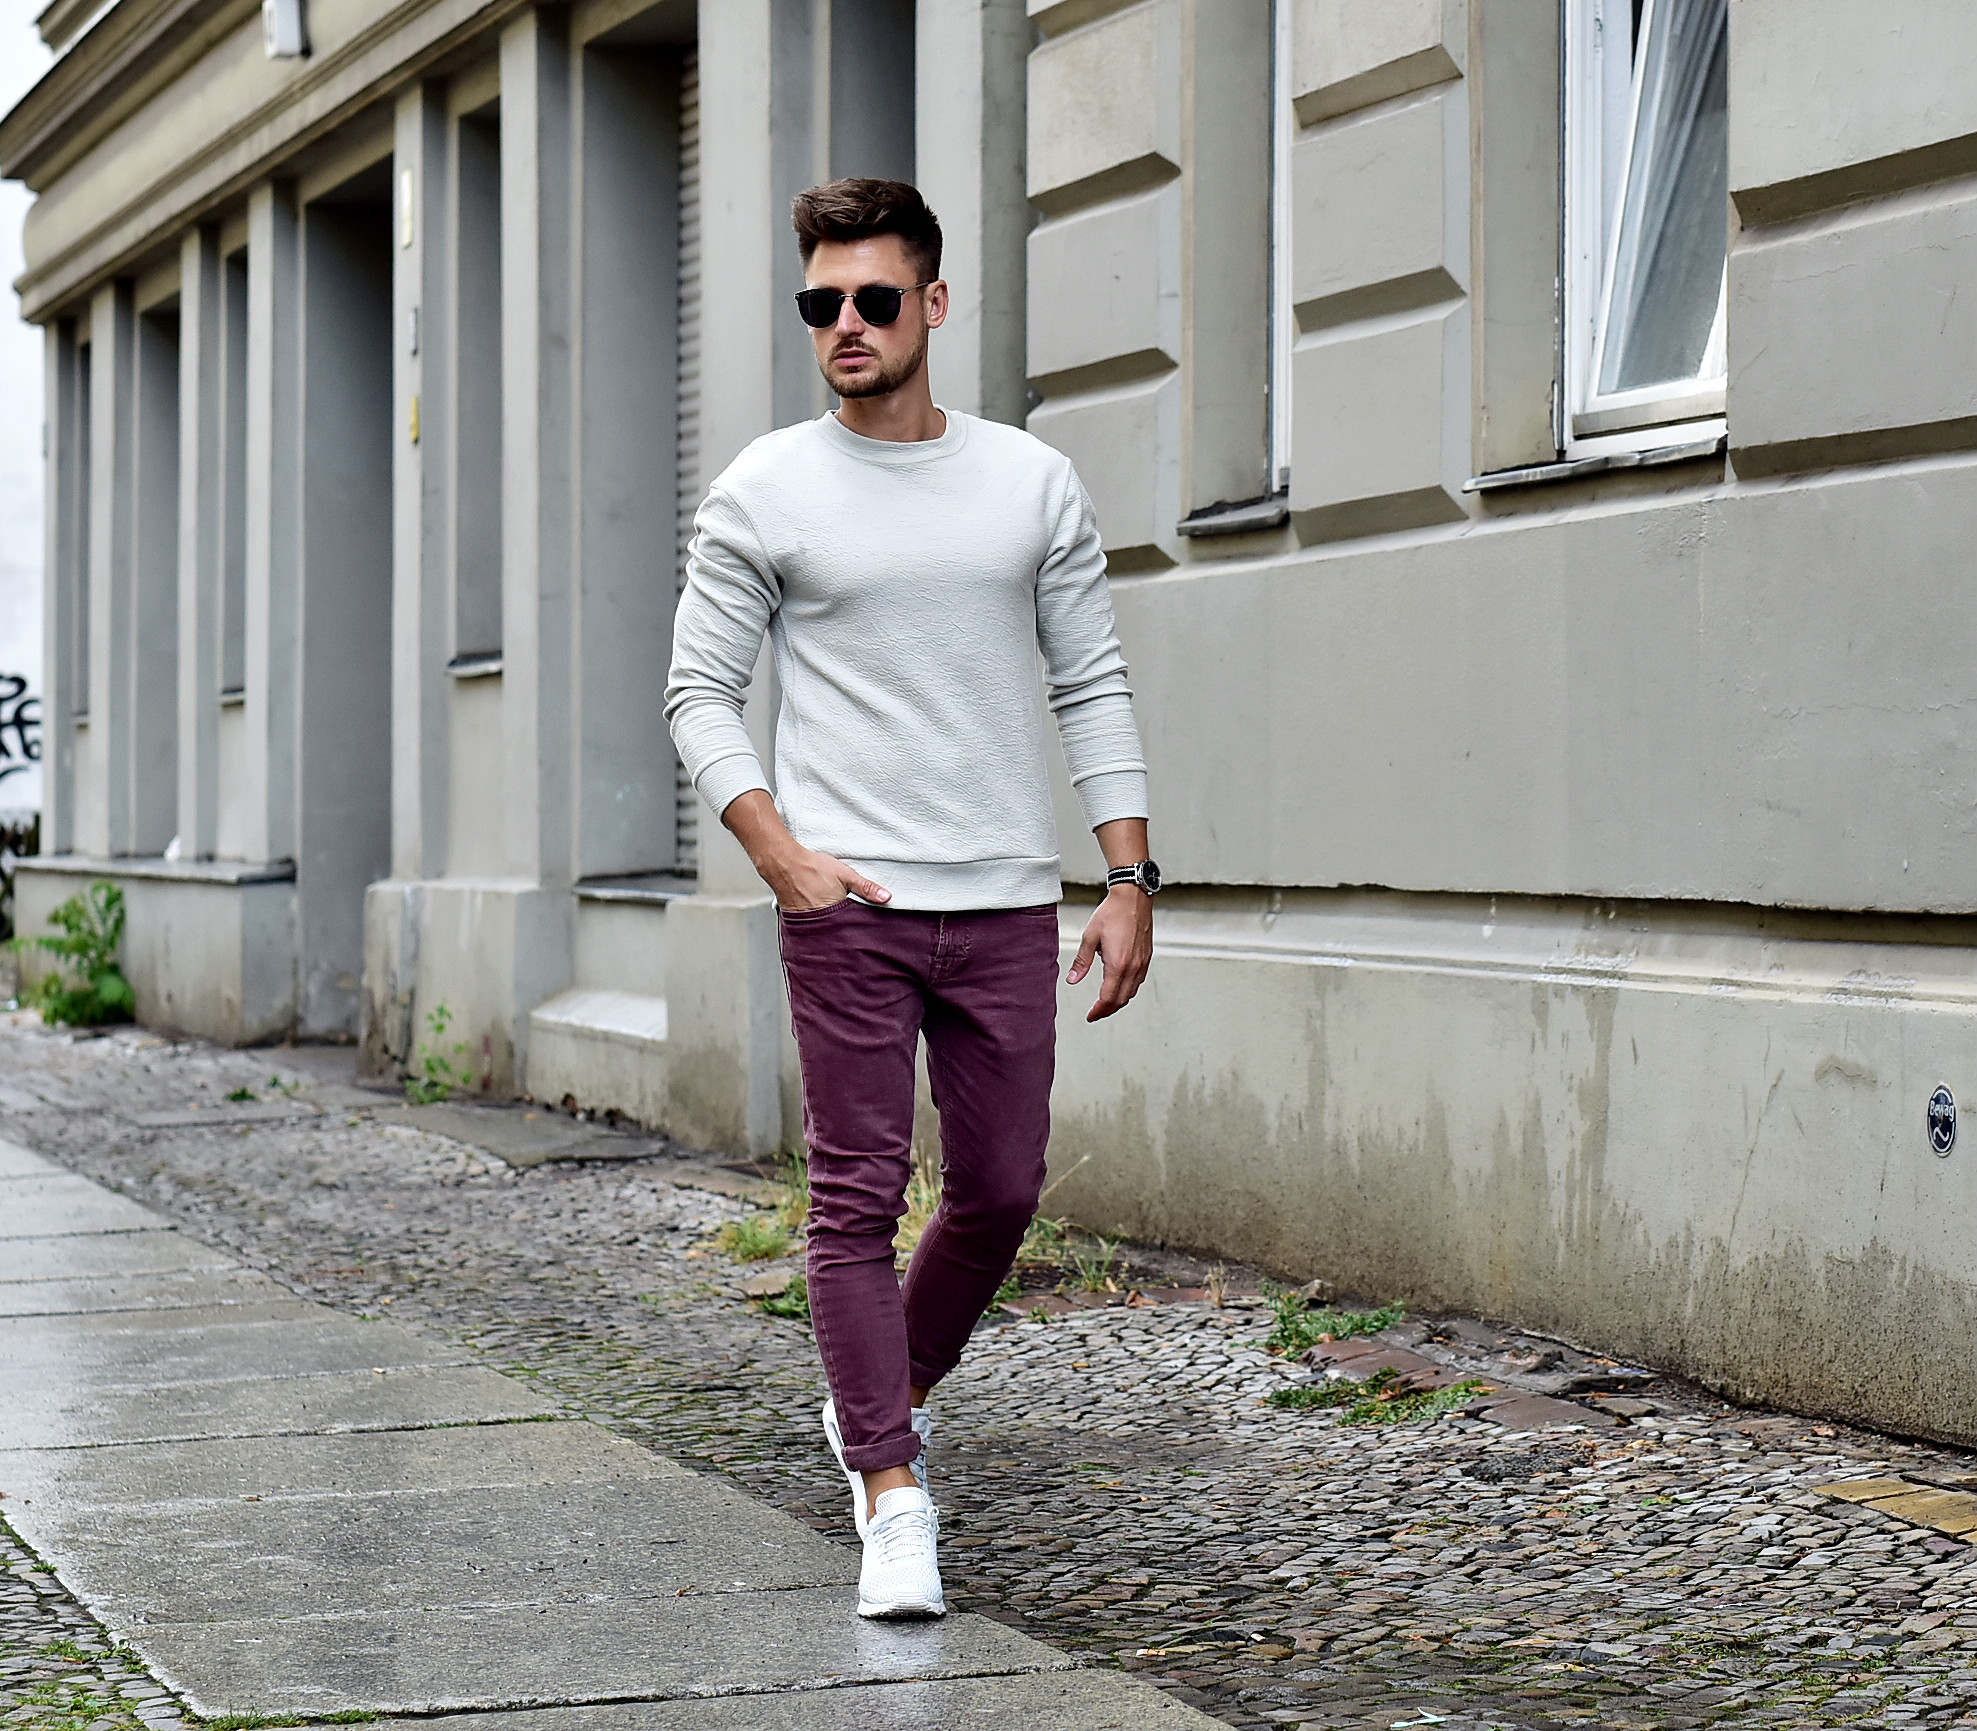 Tommeezjerry-Styleblog-Männerblog-Männer-Modeblog-Berlin-Berlinblog-Männermodeblog-Outfit-Nike-Sneaker-Creme-Sweater-Bordeaux-Burgundy-Skinny-Jeans-Zara-Thomas-Sabo-Carrear-Sonnebrille